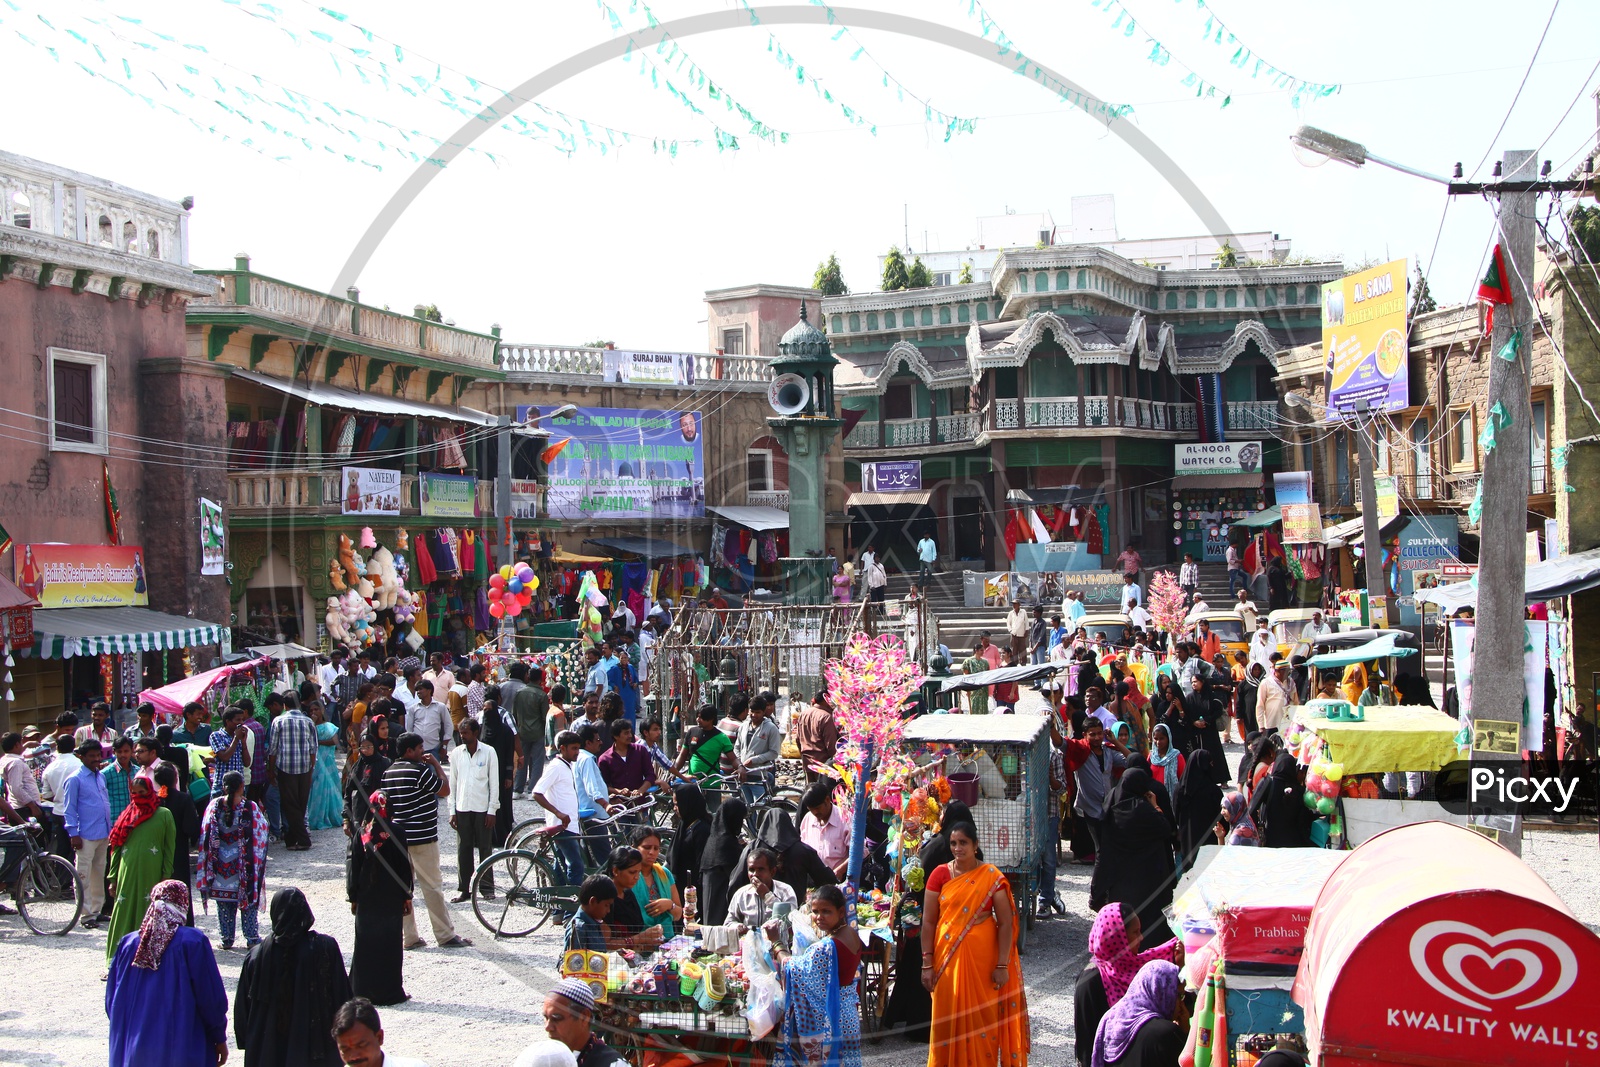 Busy vendor Street In Muslim Area